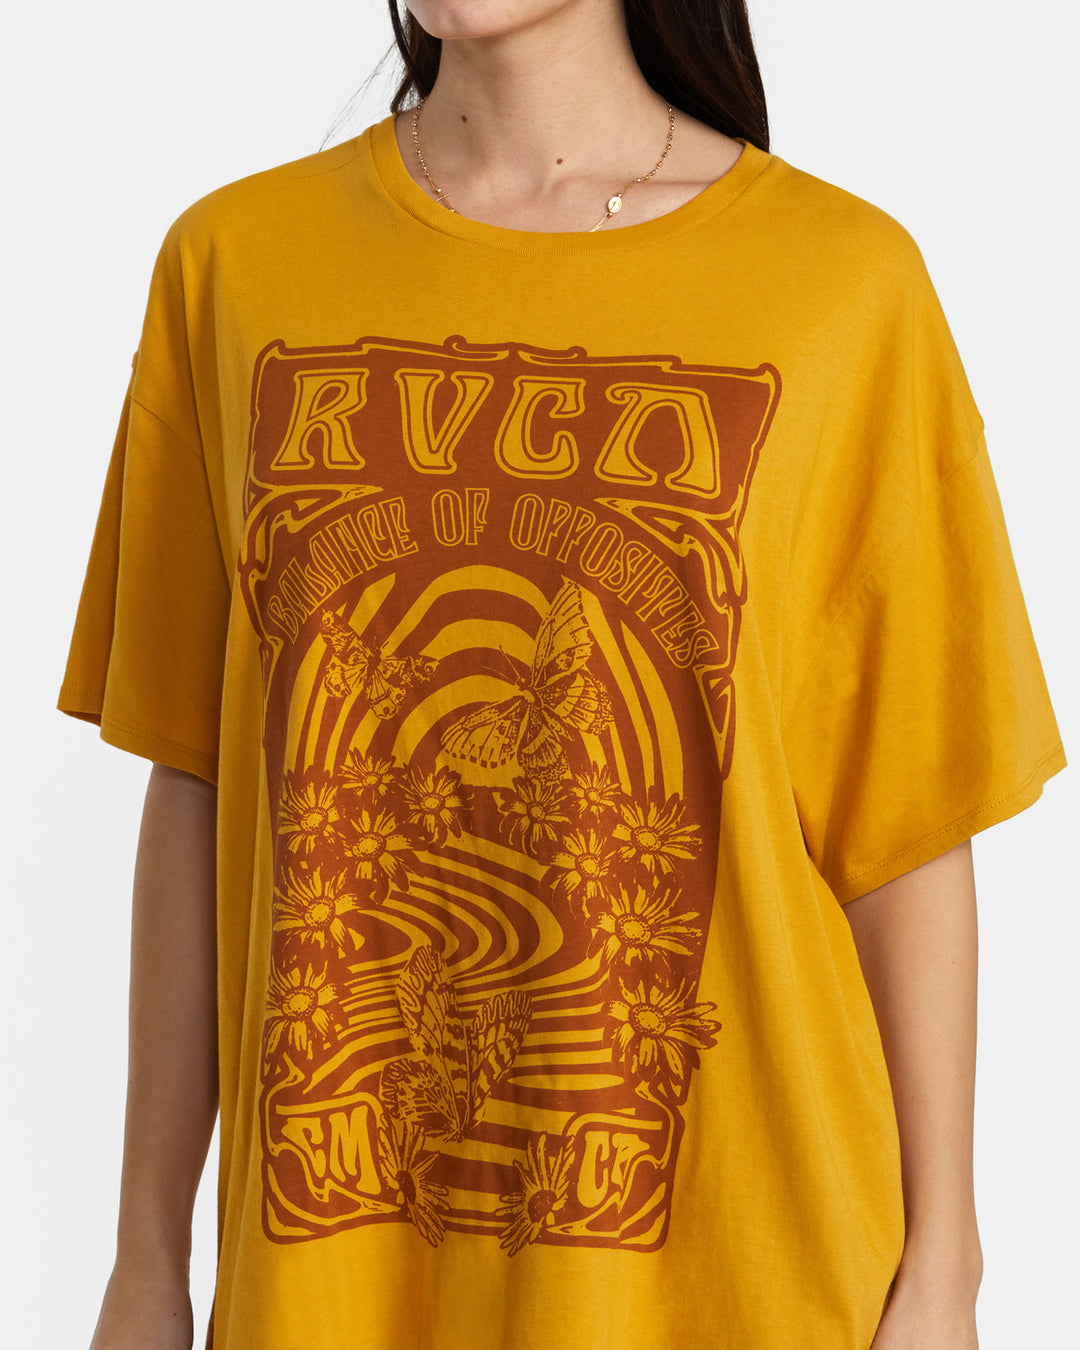 RVCA Swirl T-Shirt - Bronze - Sun Diego Boardshop